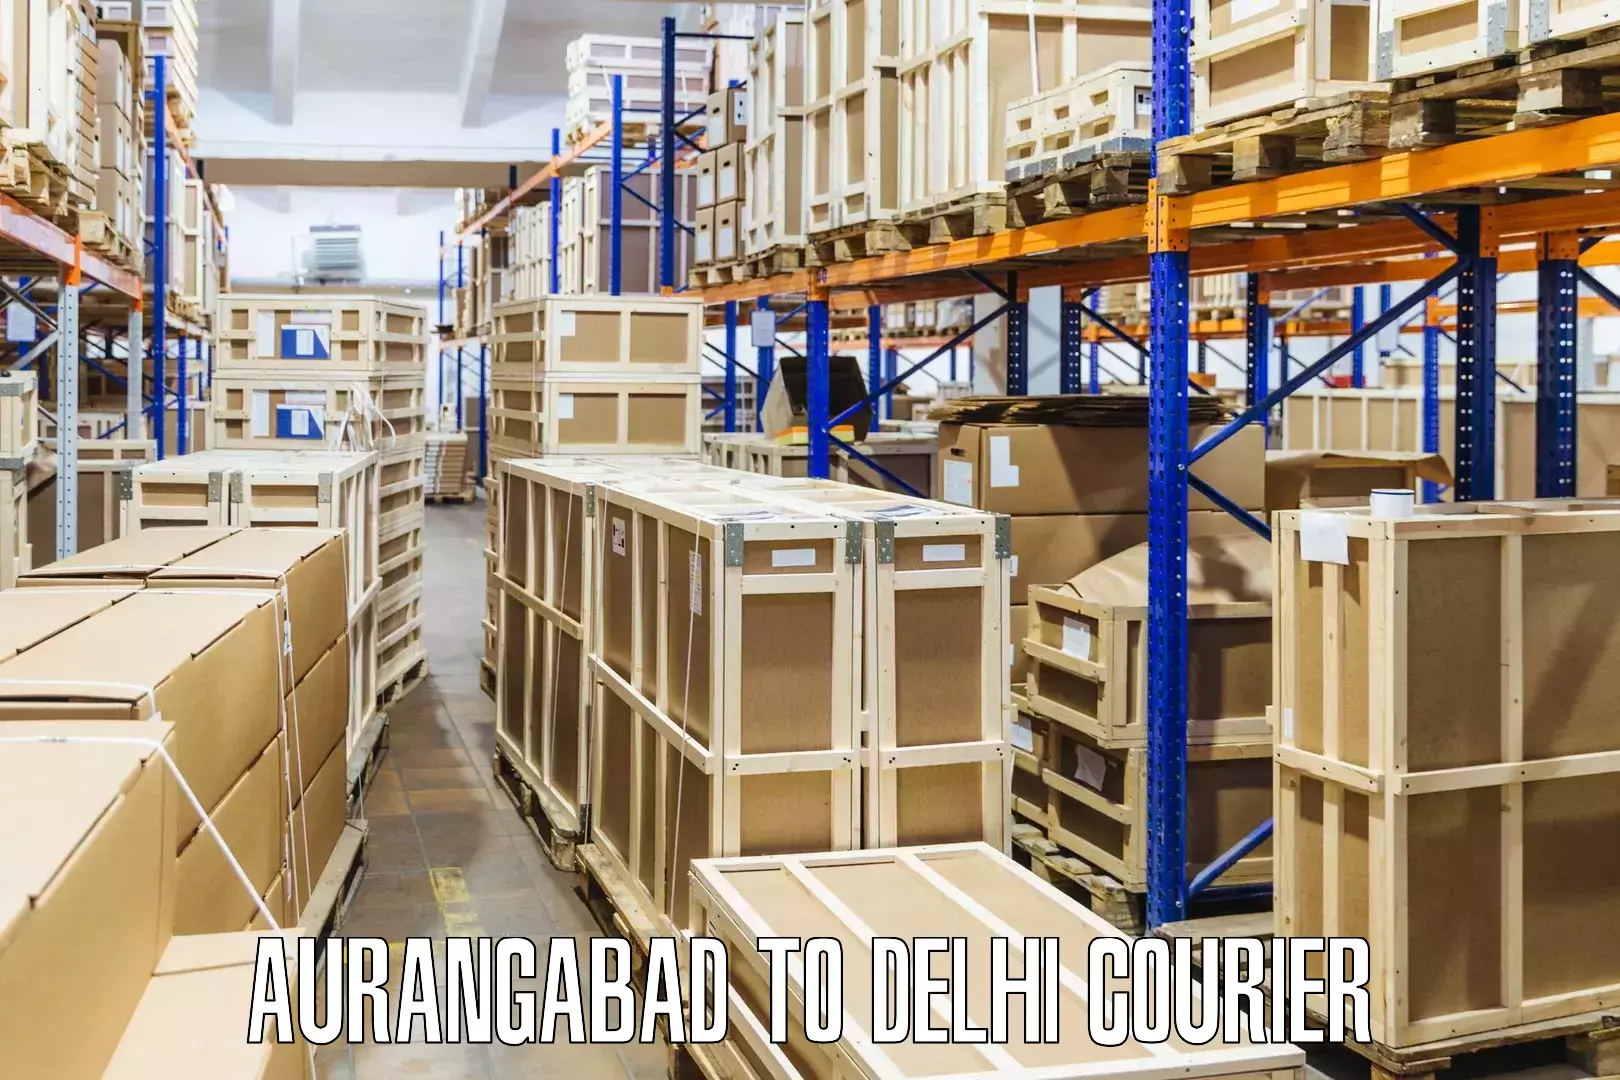 Logistics service provider Aurangabad to Delhi